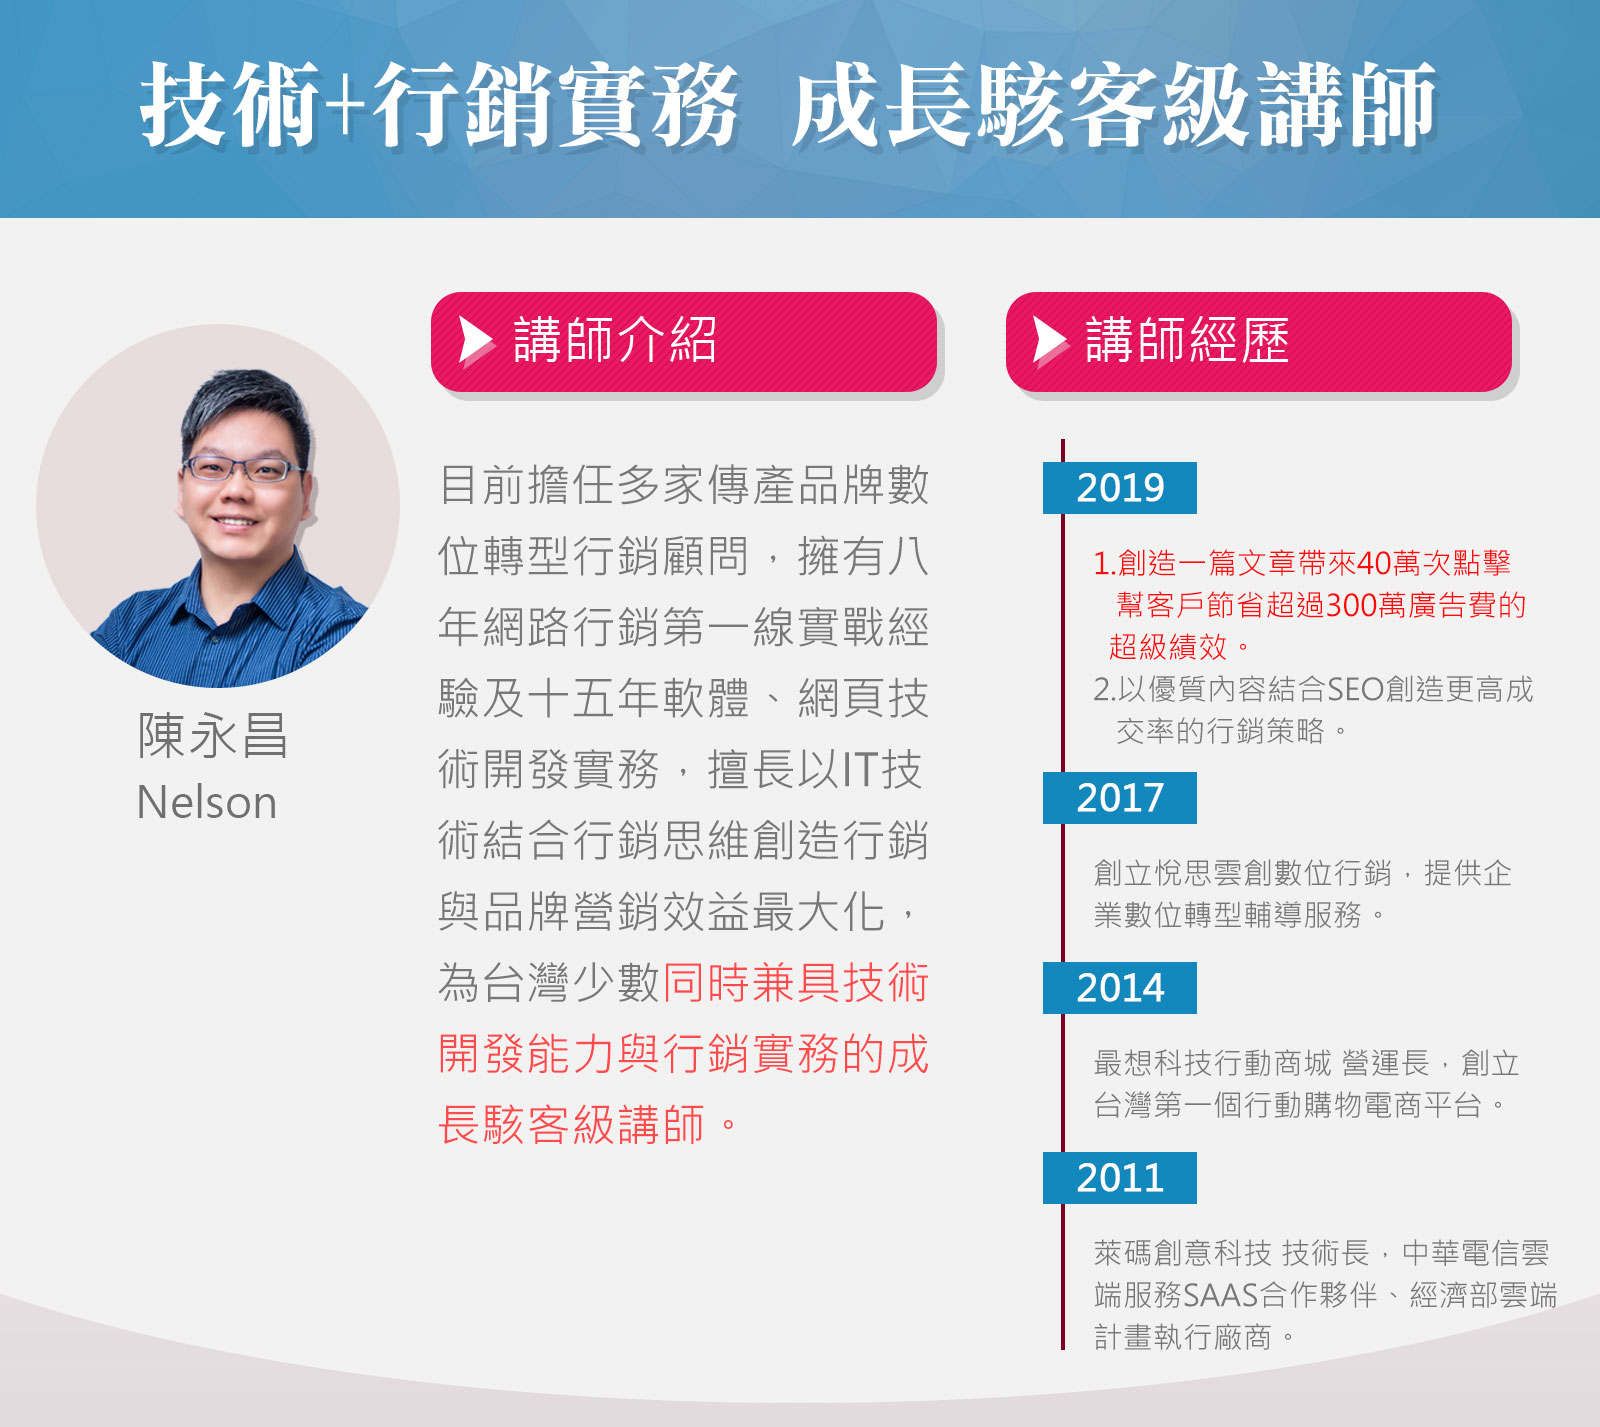 Nelson Chen 數位行銷講師